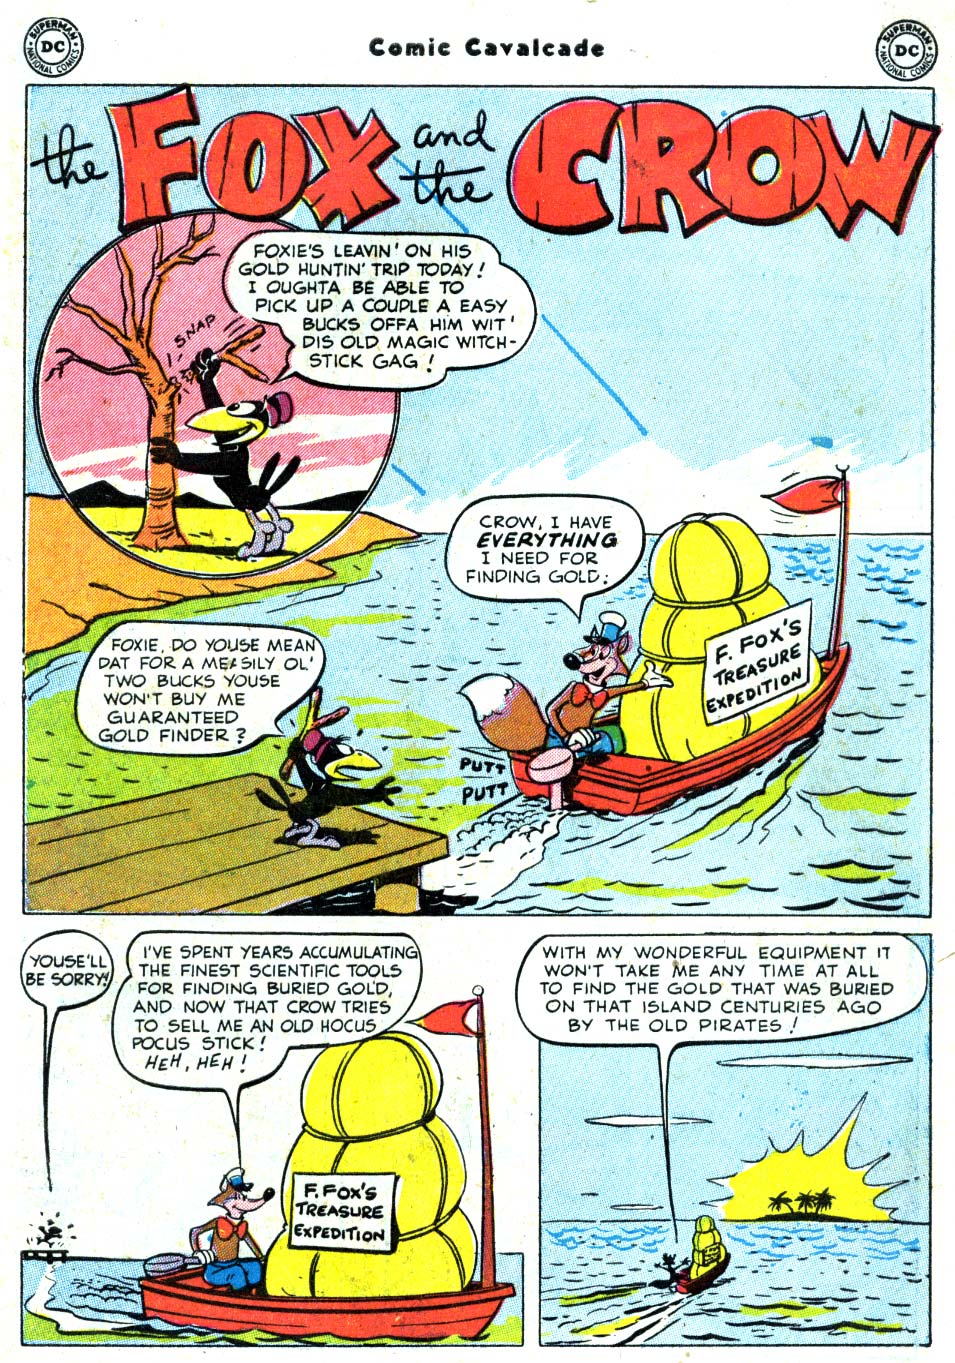 Comic Cavalcade issue 46 - Page 3